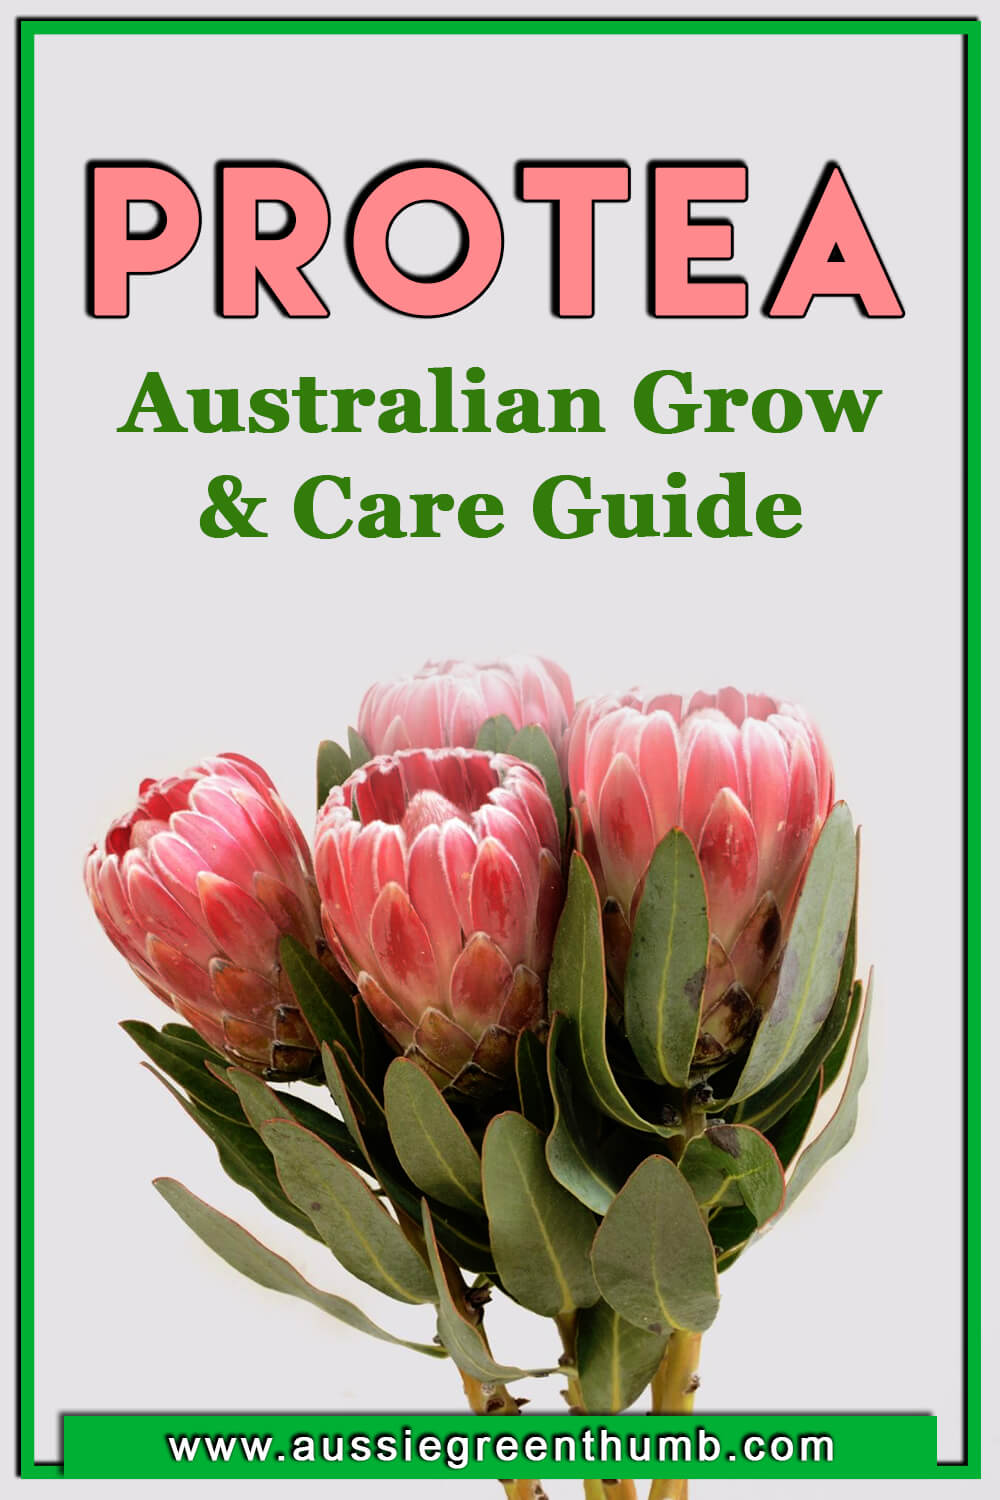 Protea Australian Grow & Care Guide